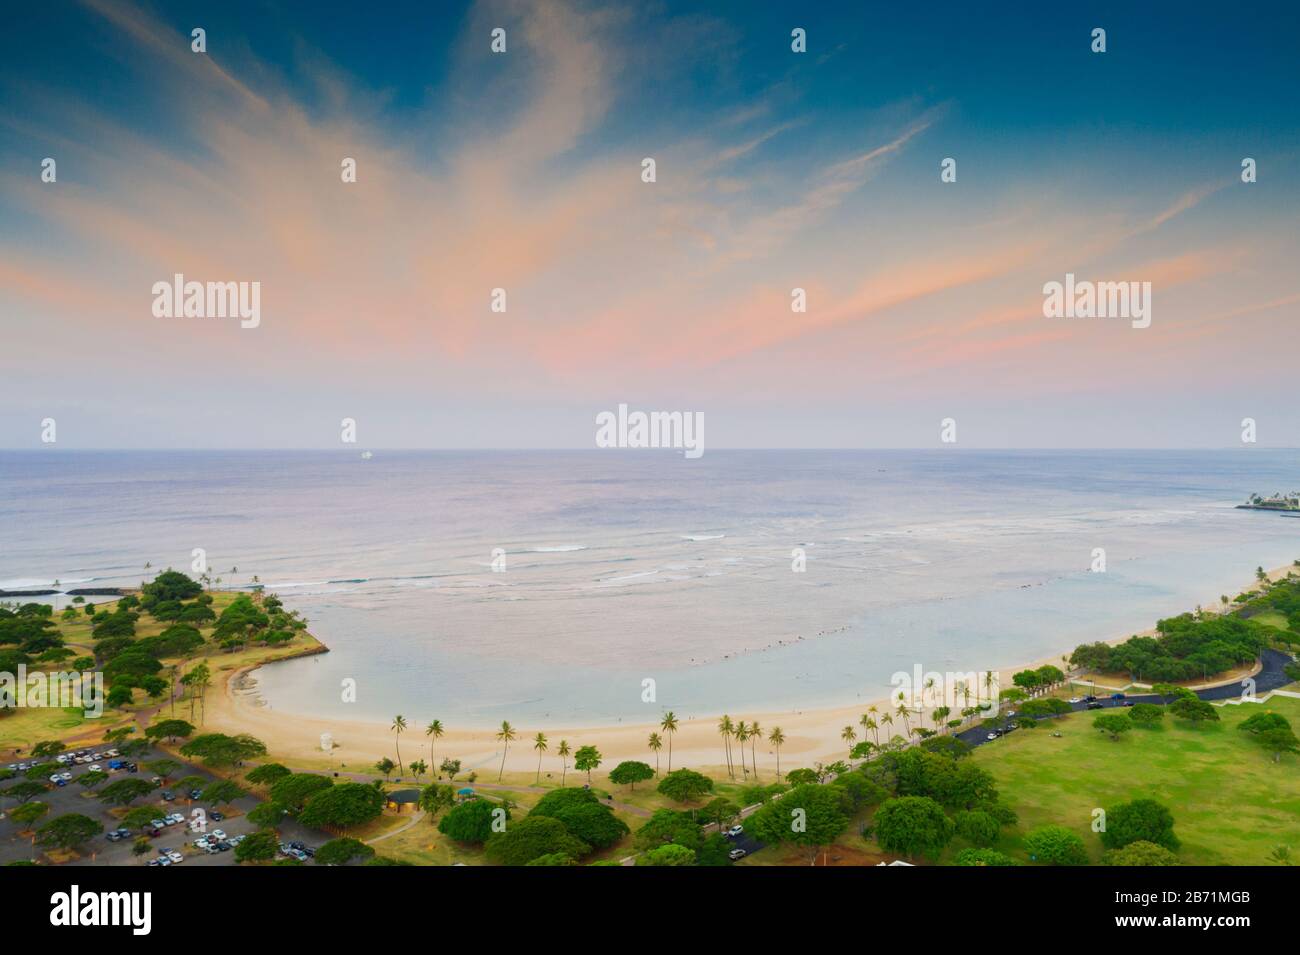 United States of America, Hawaii, Oahu island, Waikiki sunset, aerial view Stock Photo